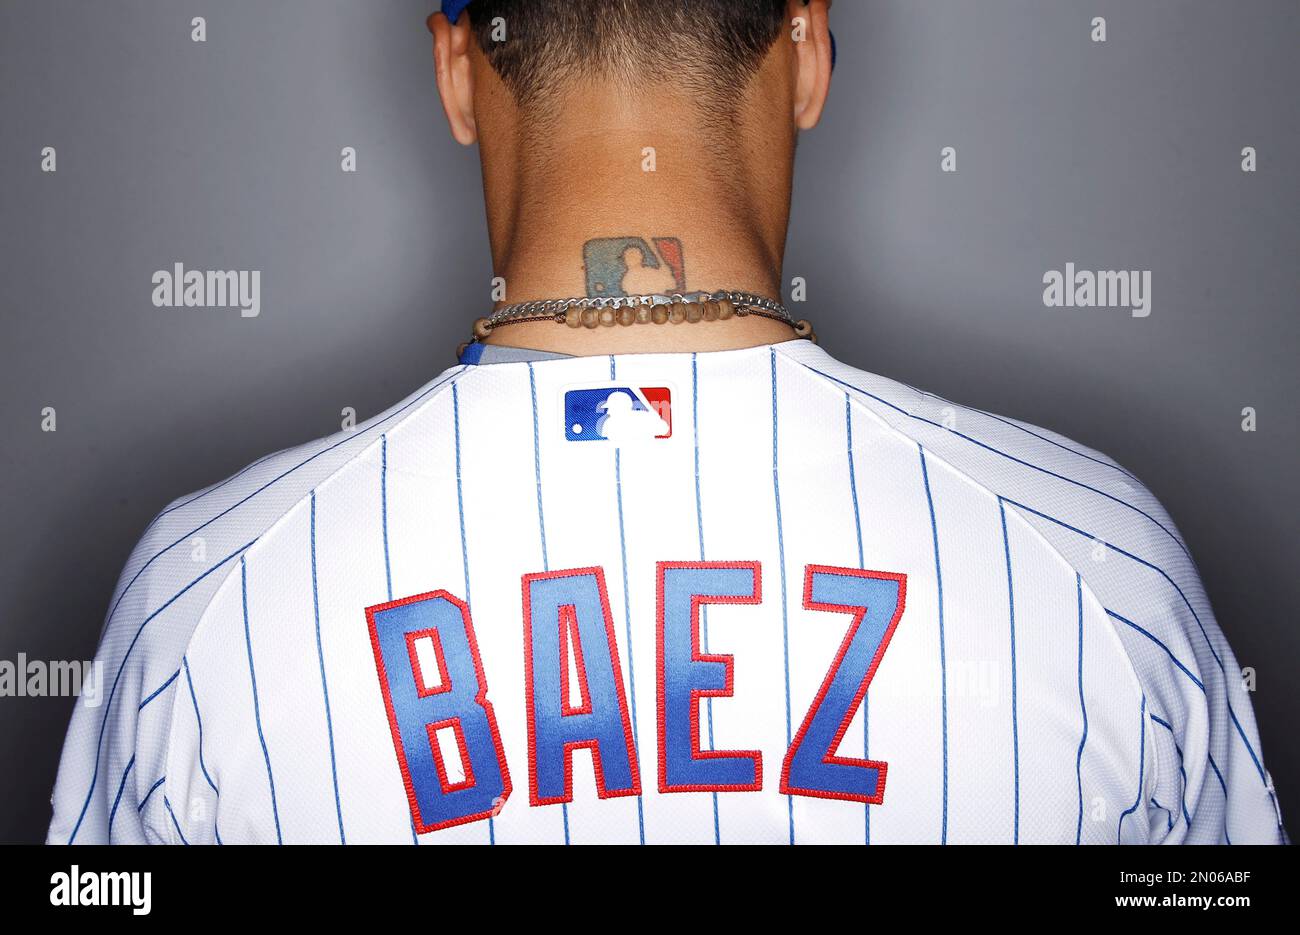 Javier Baez commemorates Cubs' championship with impressive tattoo